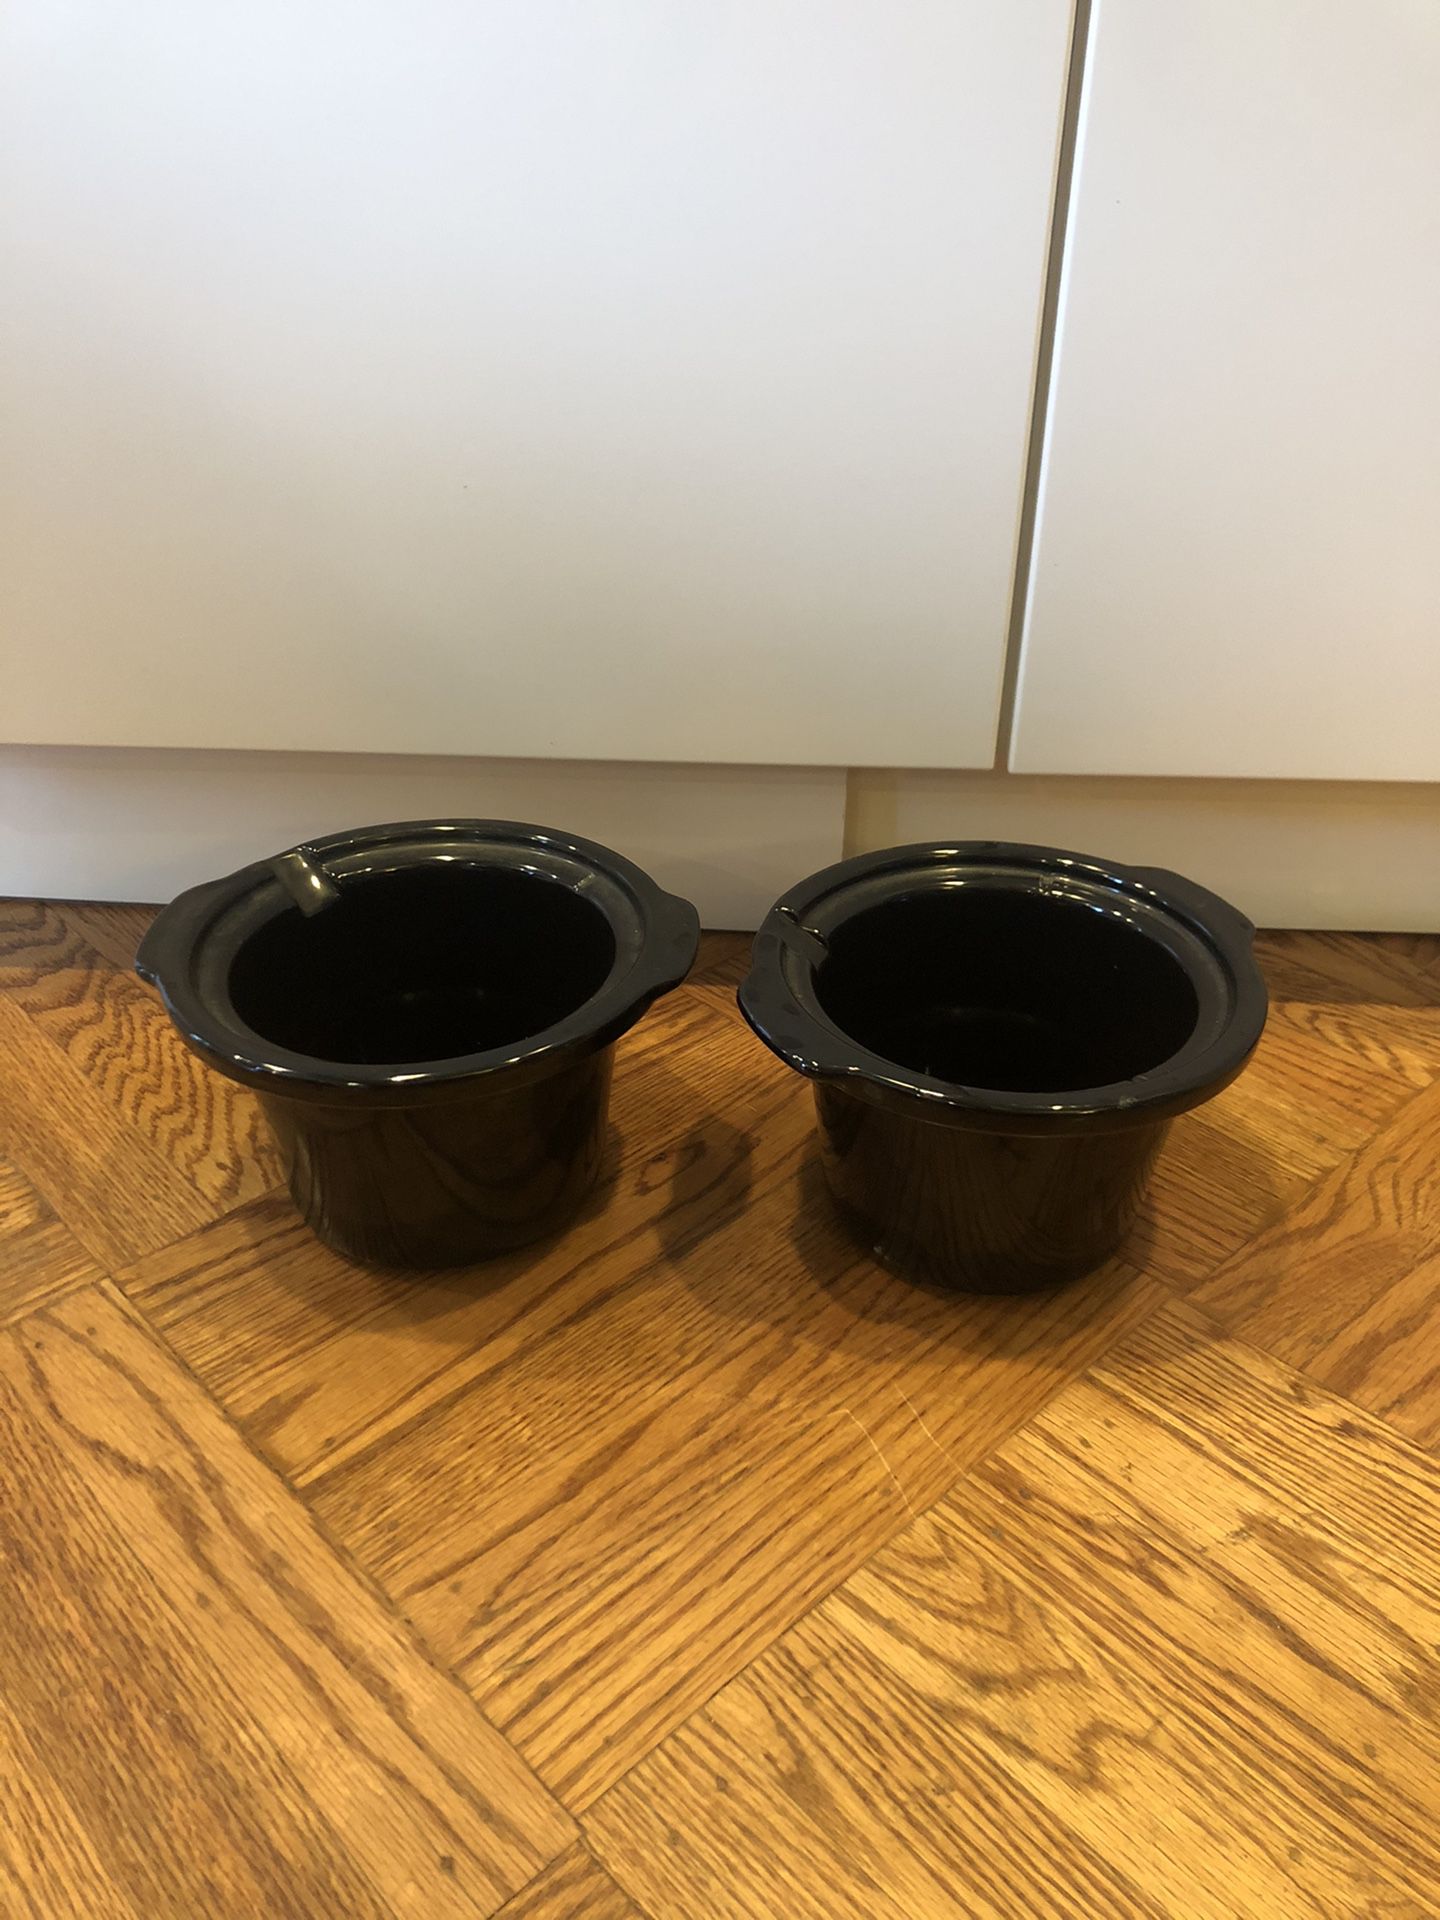 Two ceramic flower pots